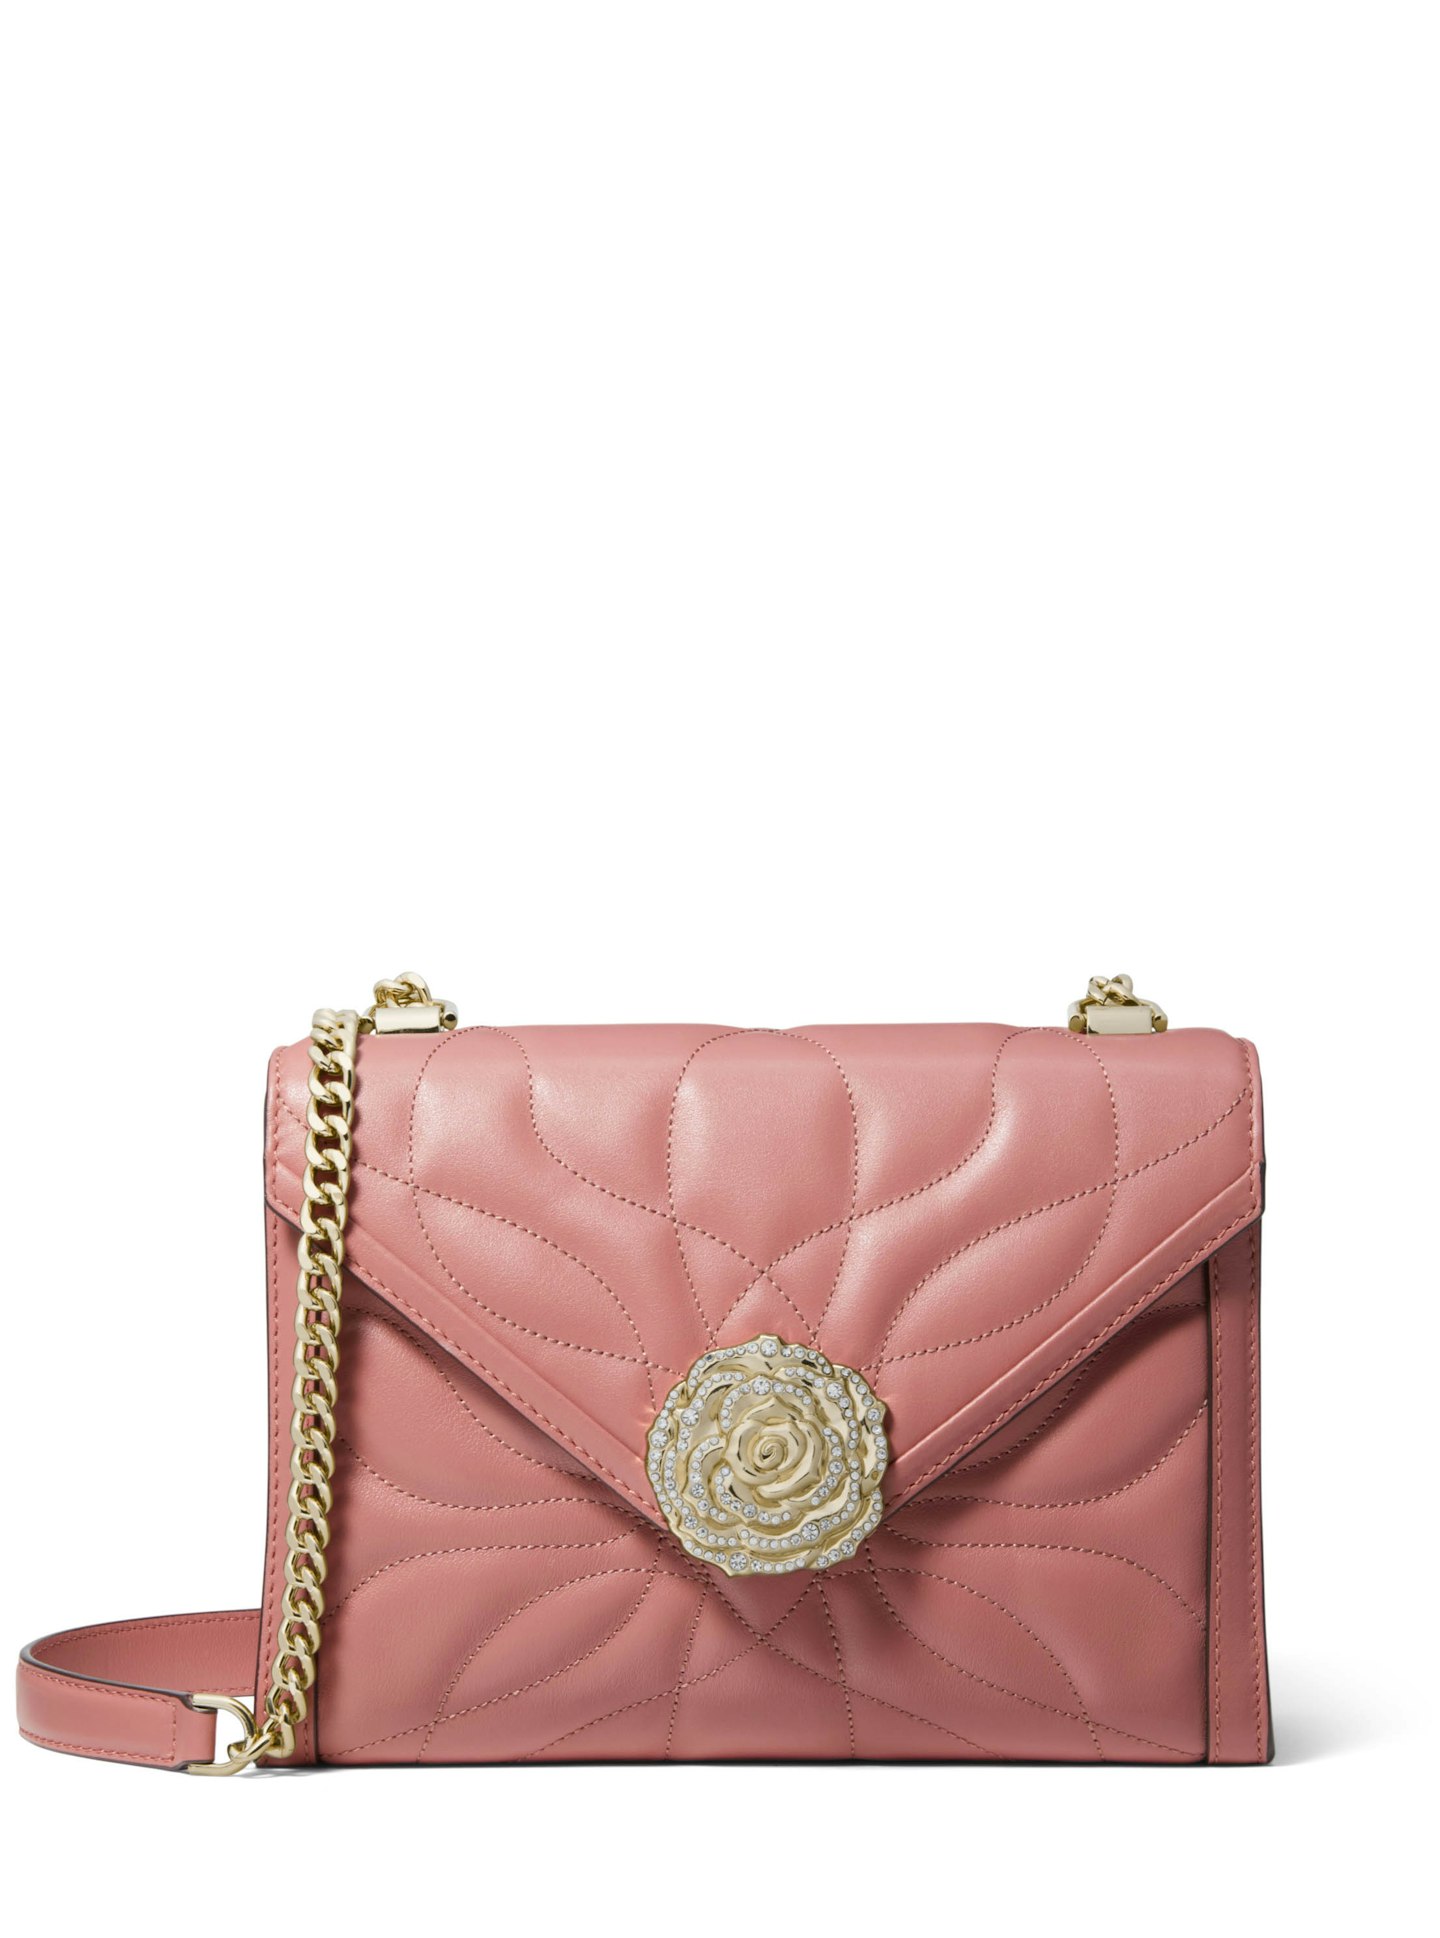 Michael Kors - Rose Floral Quilted Leather Whitney Shoulder Bag